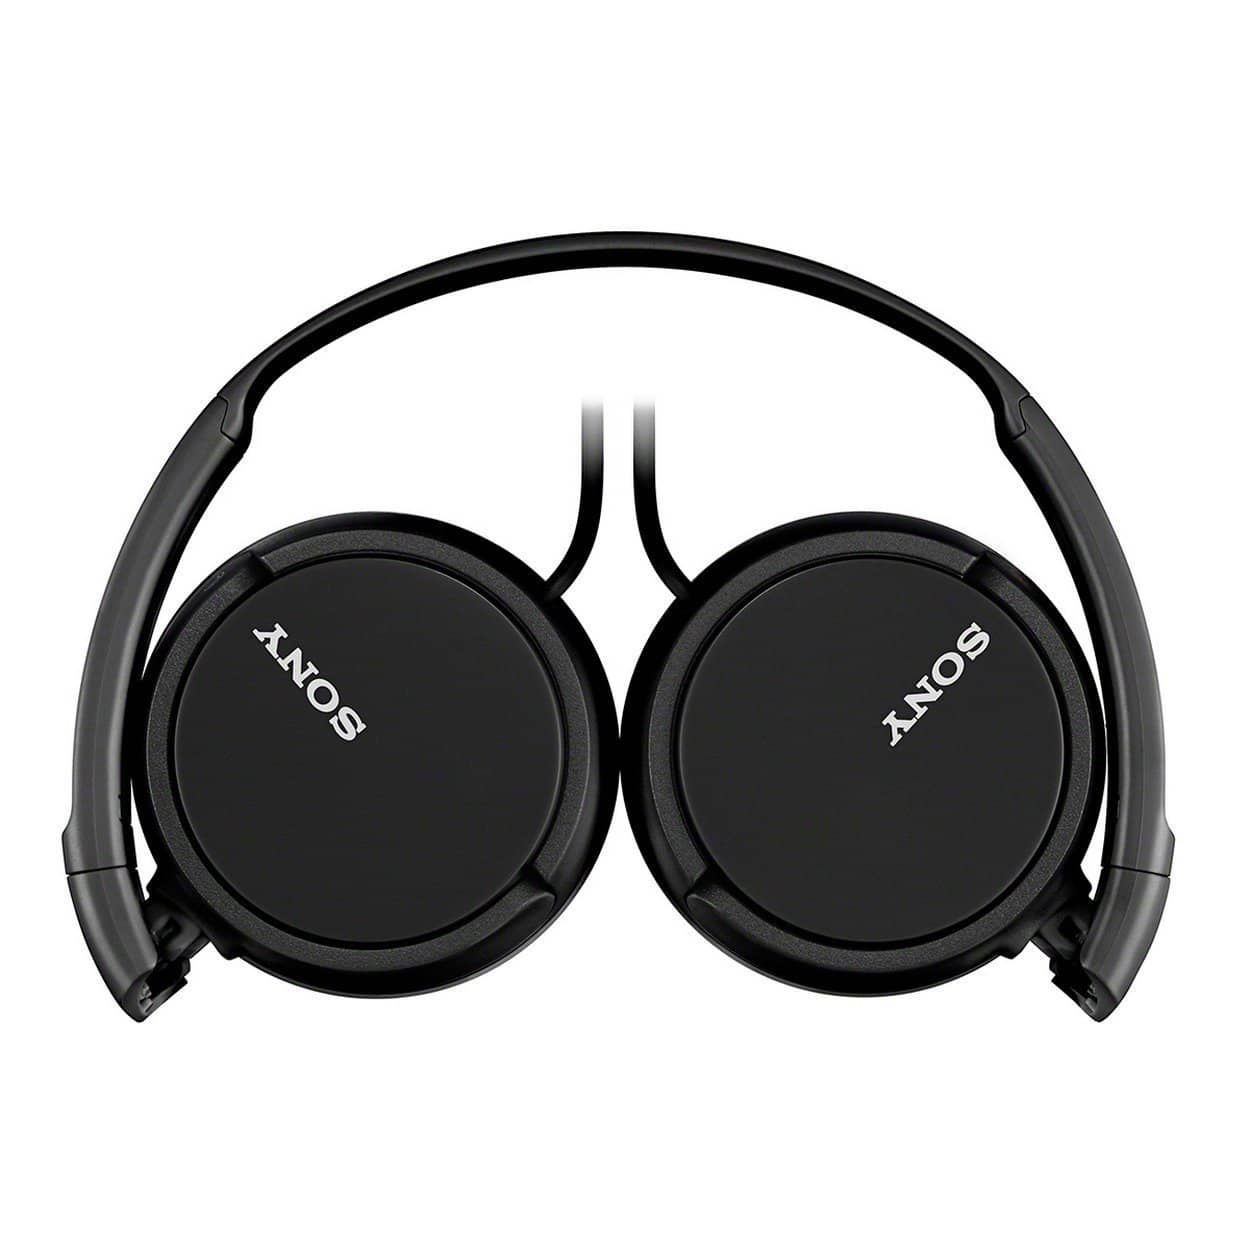 Sony MDRZX110 ZX Series Stereo Headphones